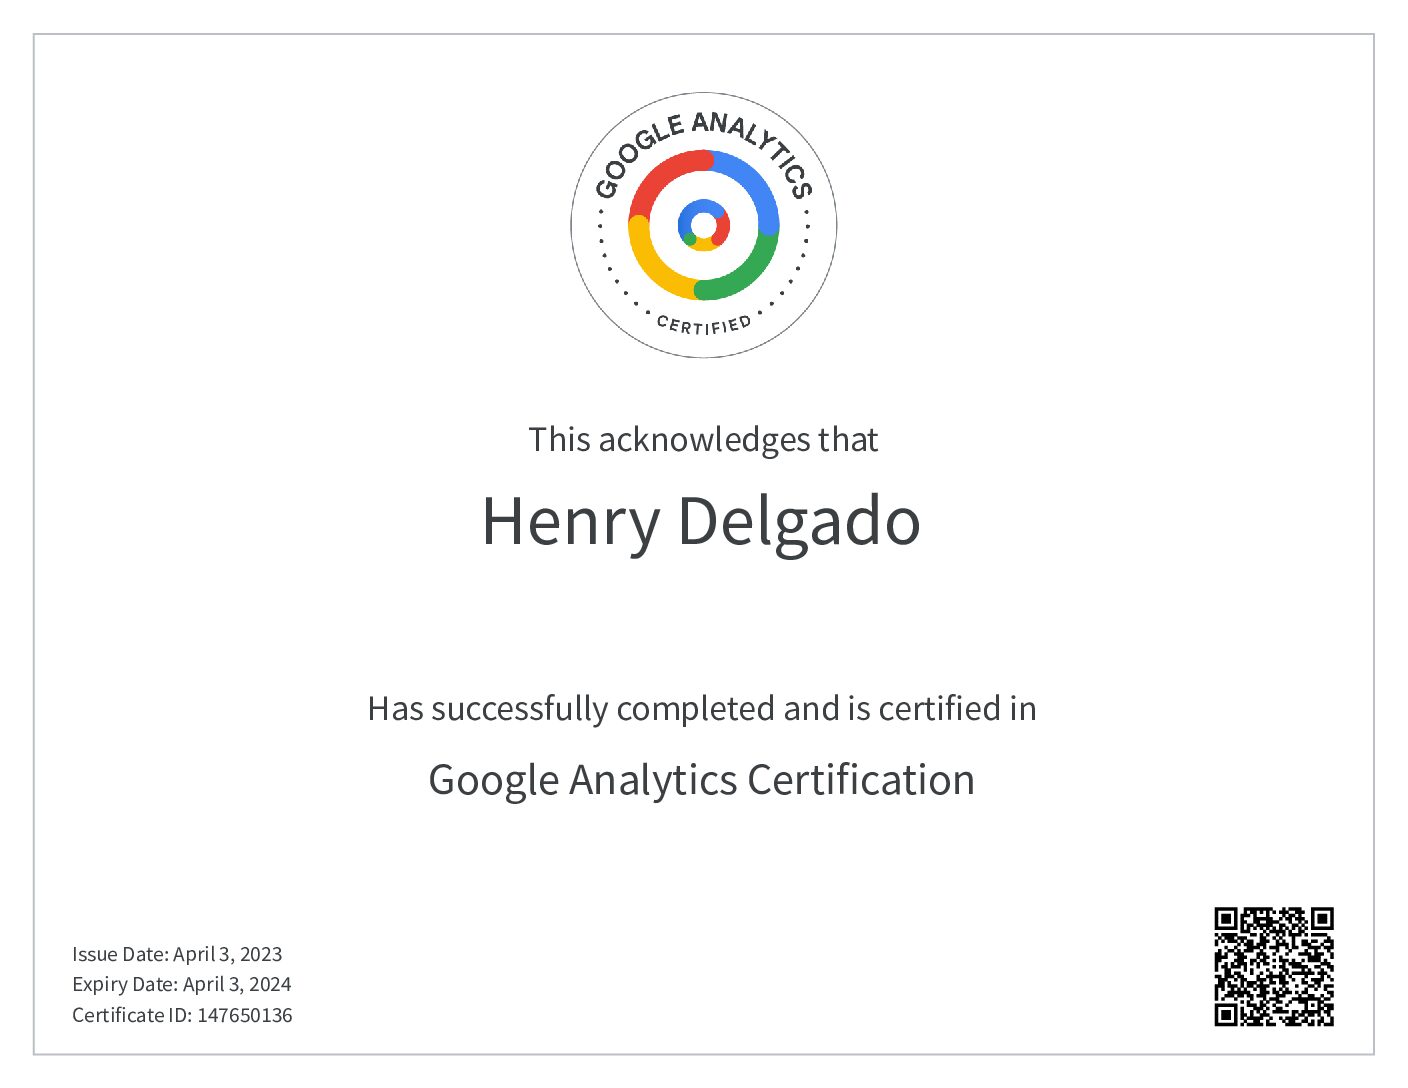 Henry Delgado Google Analytics Certification